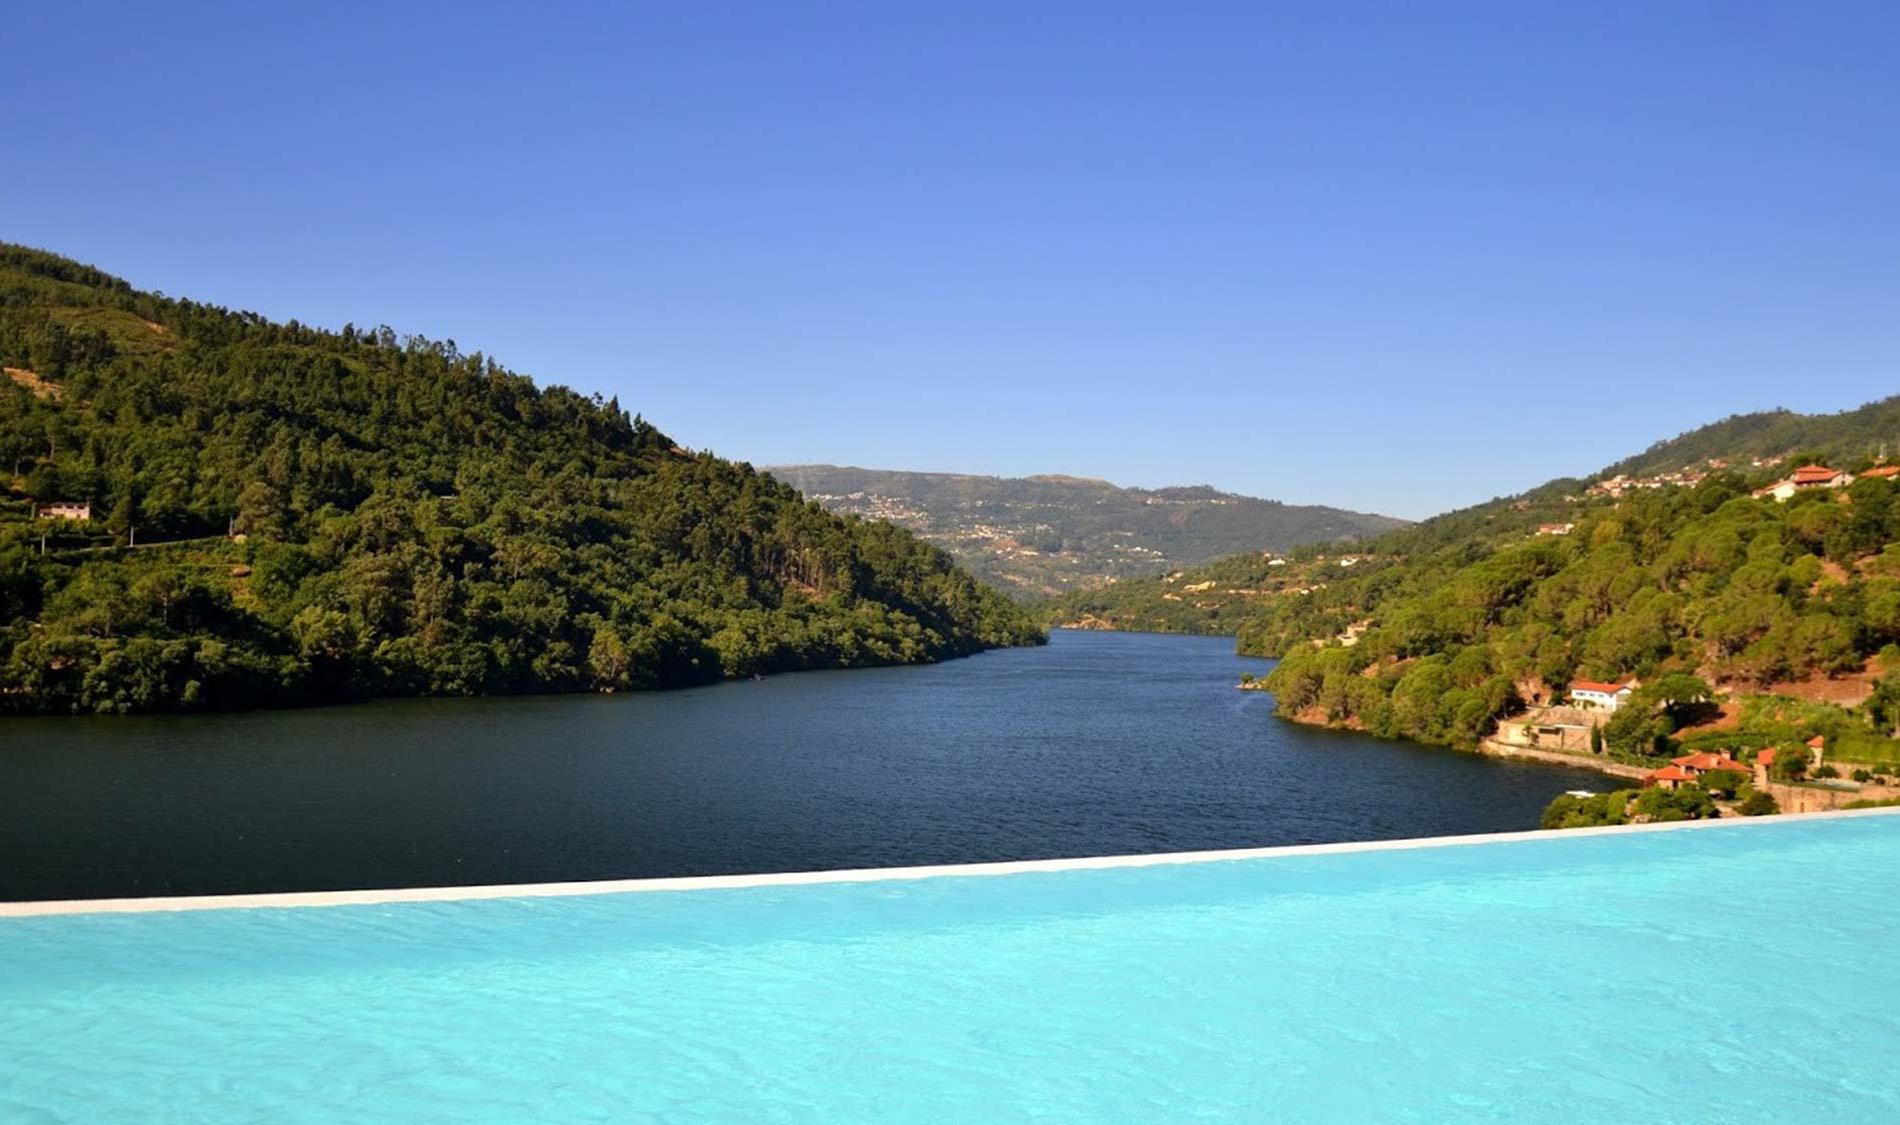 Piscina infinita: 12 piscinas de tirar o folego. Douro Royal Valley Hotel, Portugal. Blog Obra Atelier 